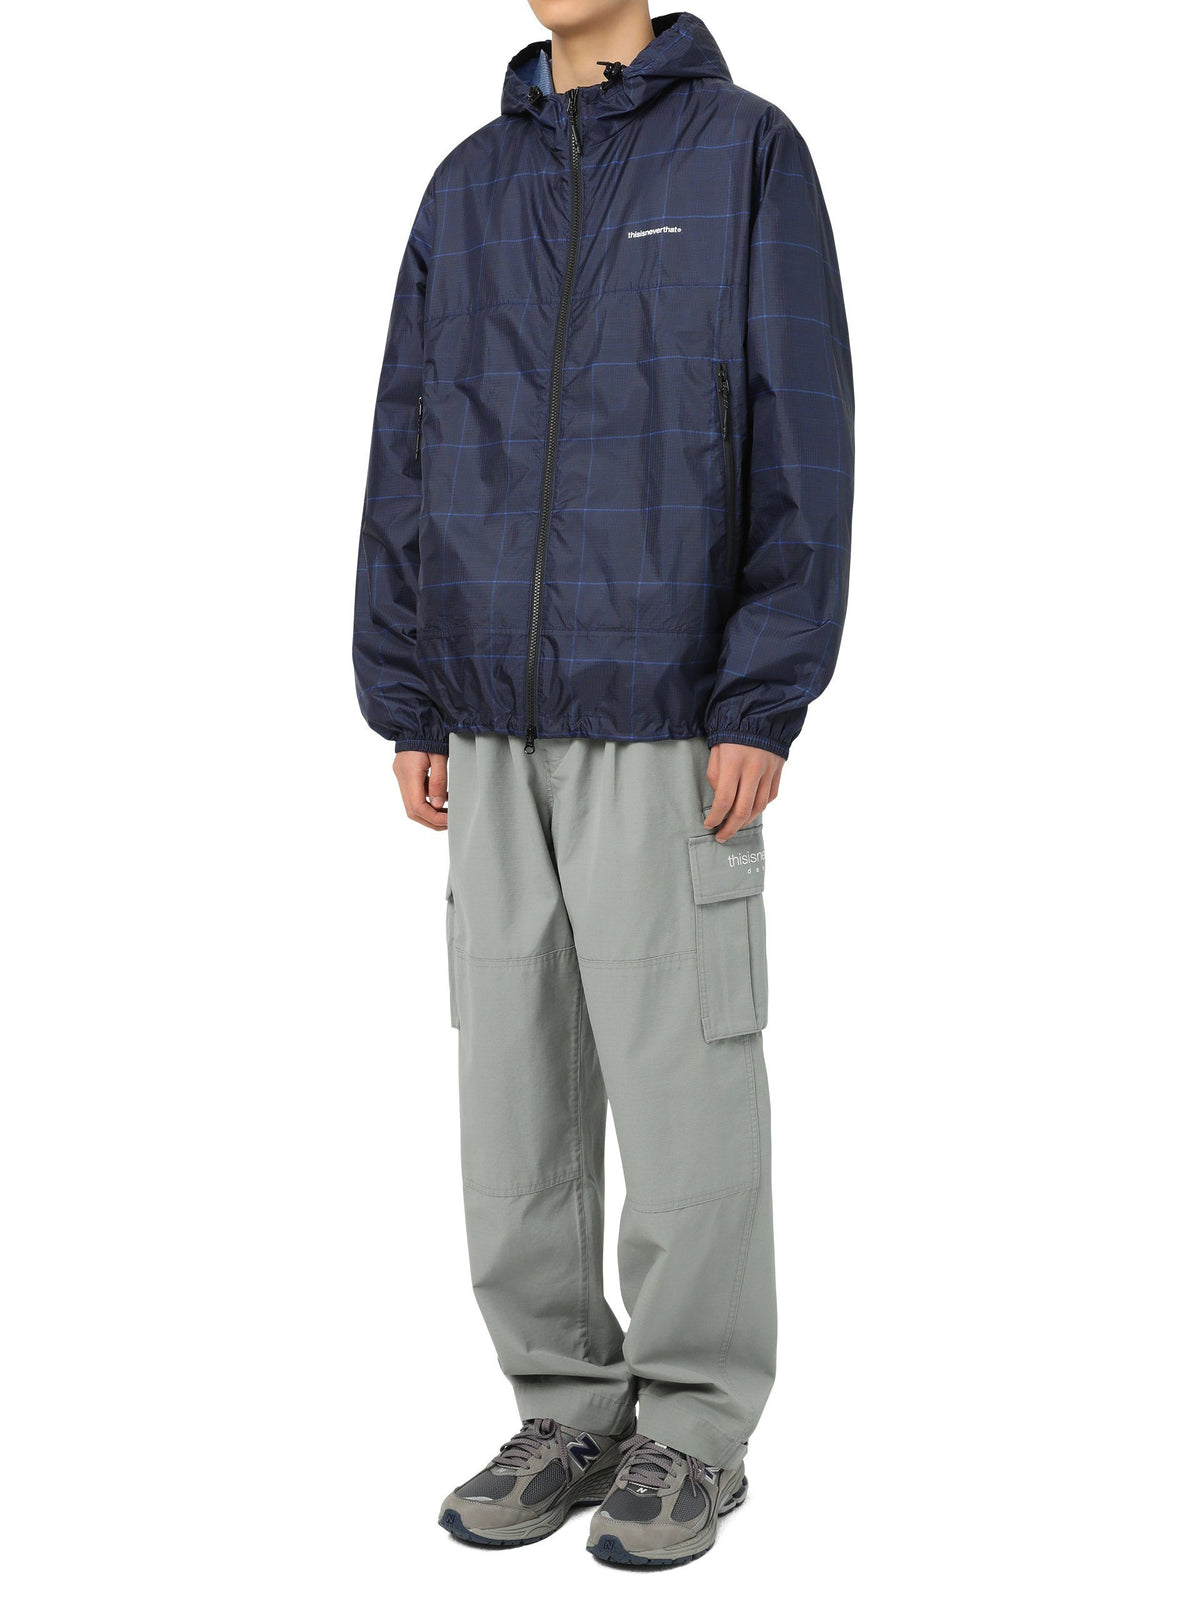 T-Light Jacket Outerwear 